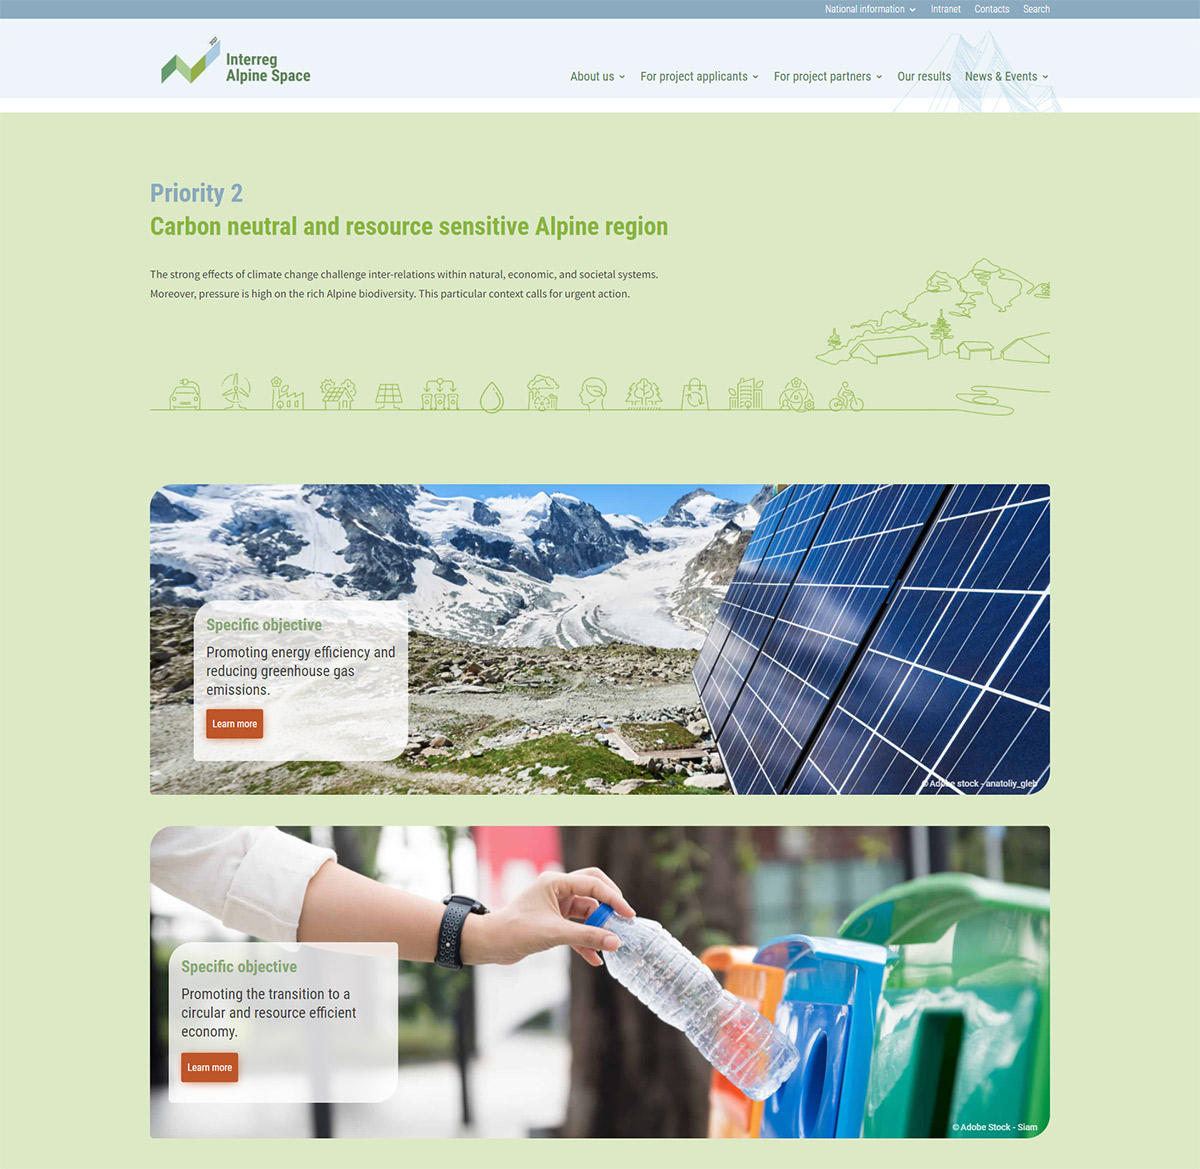 iService Relaunch Website Interreg Alpine Space